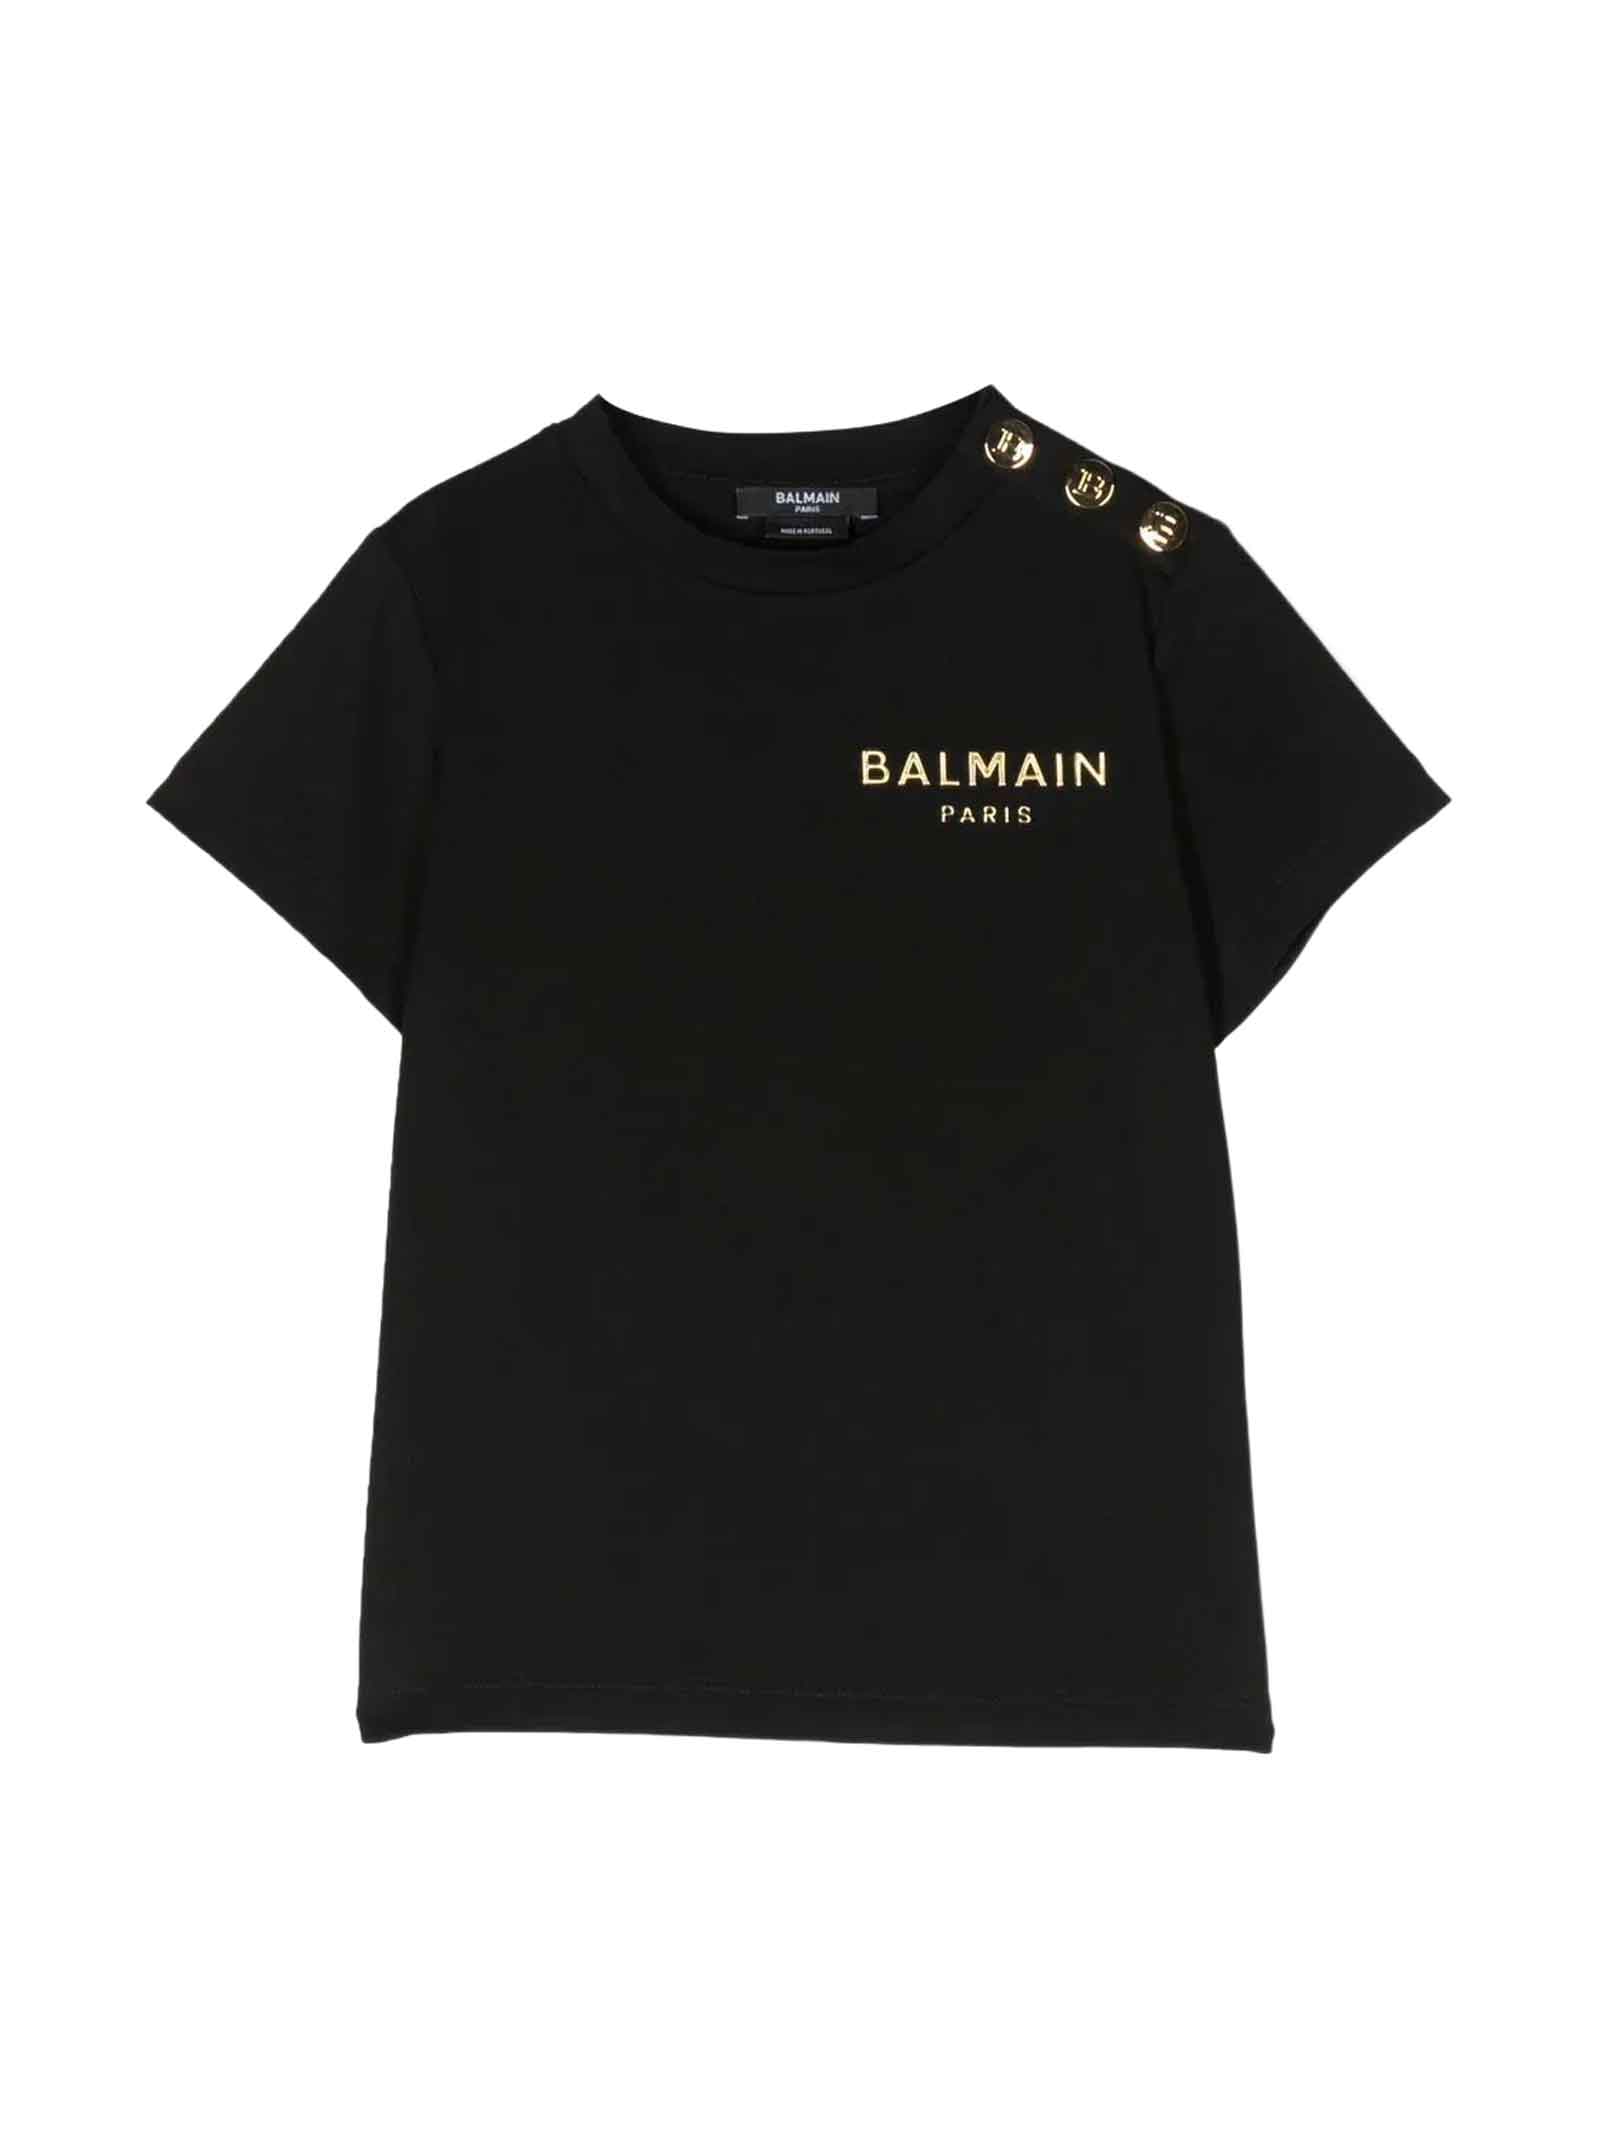 BALMAIN BLACK T-SHIRT GIRL